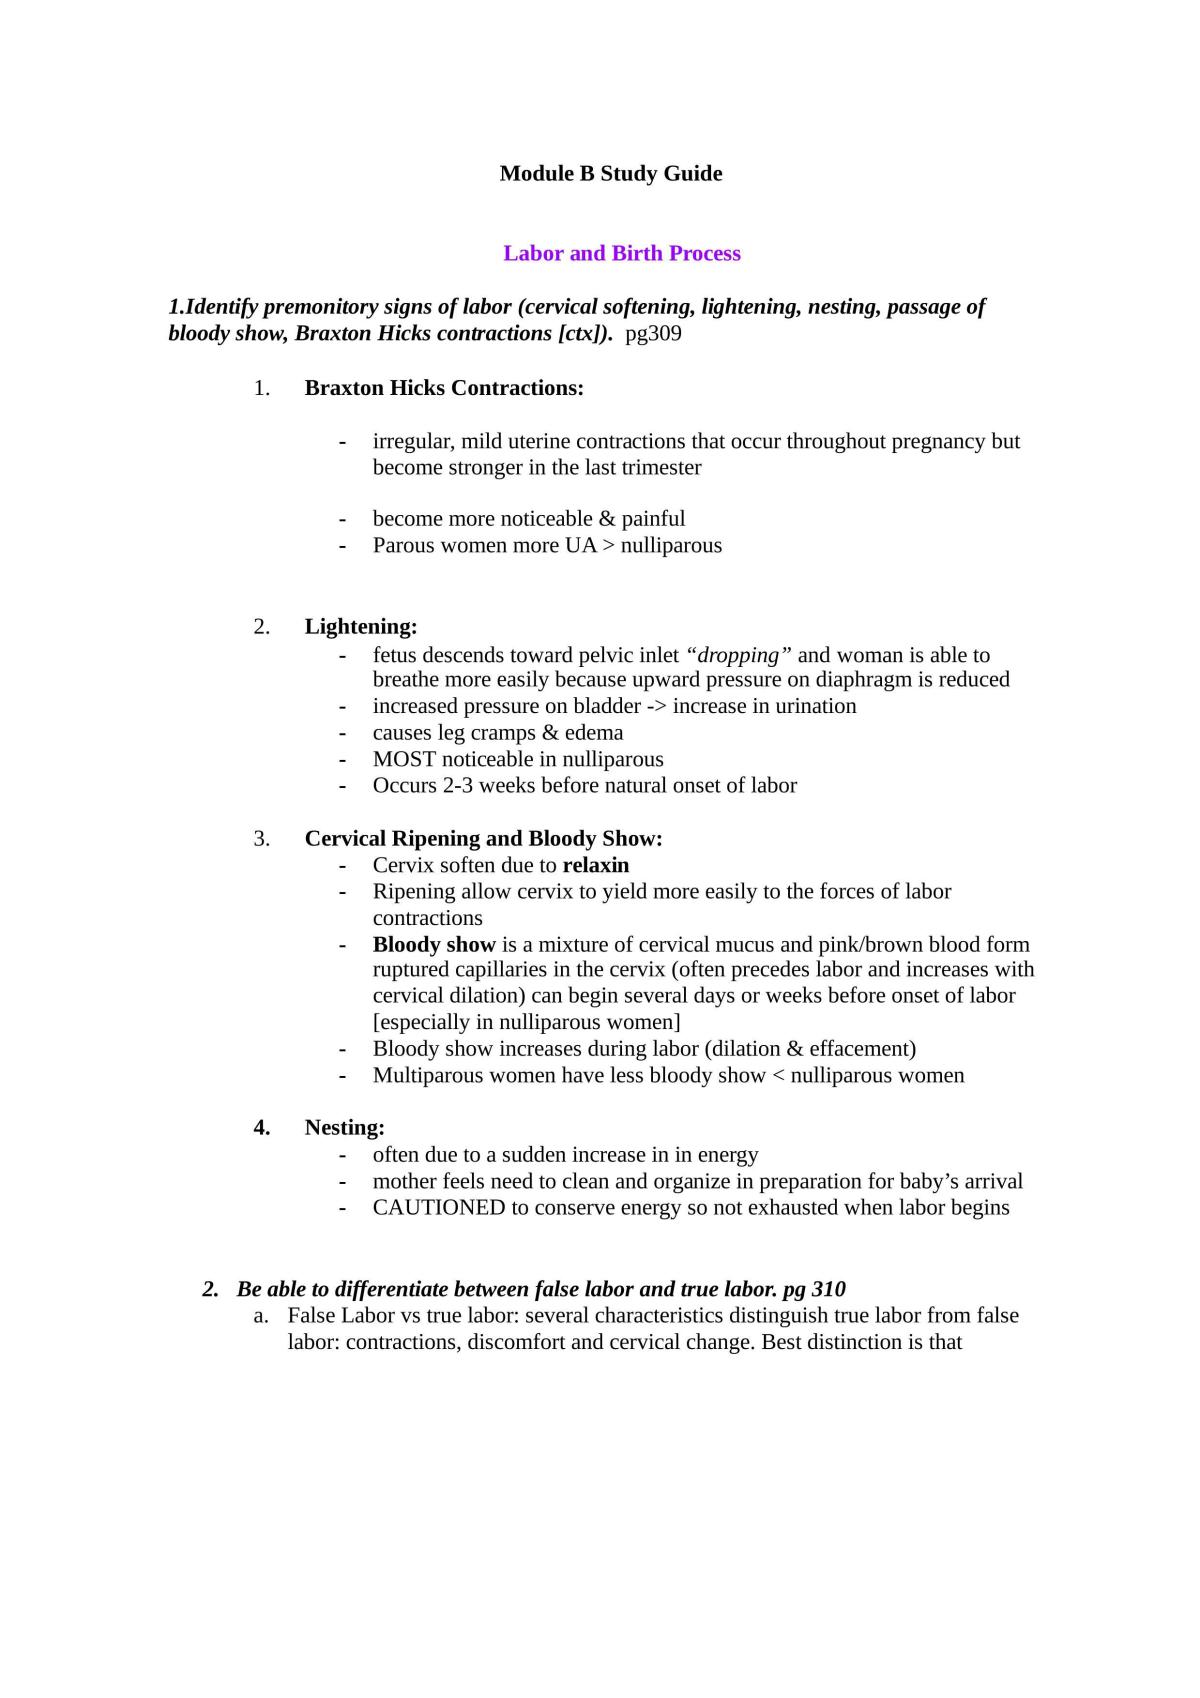 Module B Study Guide - Page 1